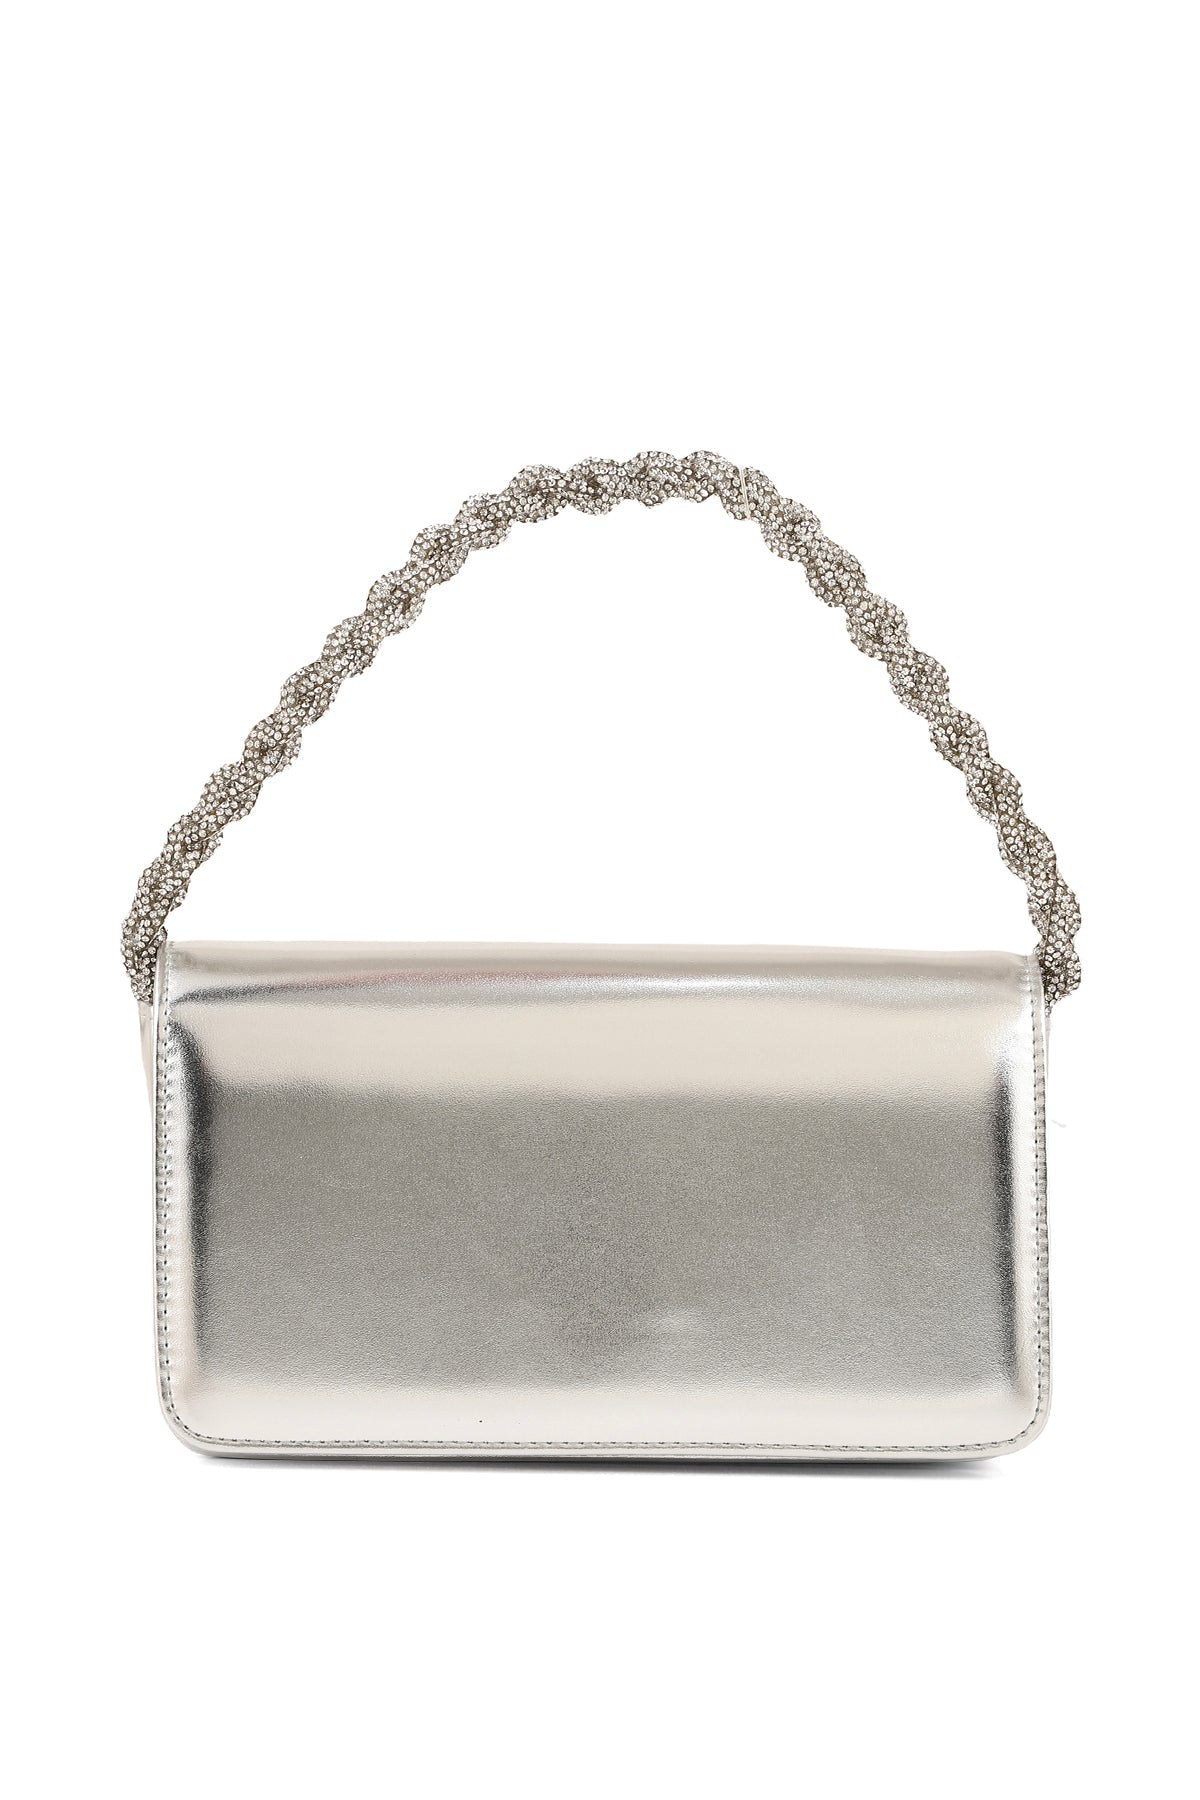 Baguette Shoulder Bags B20761-Silver